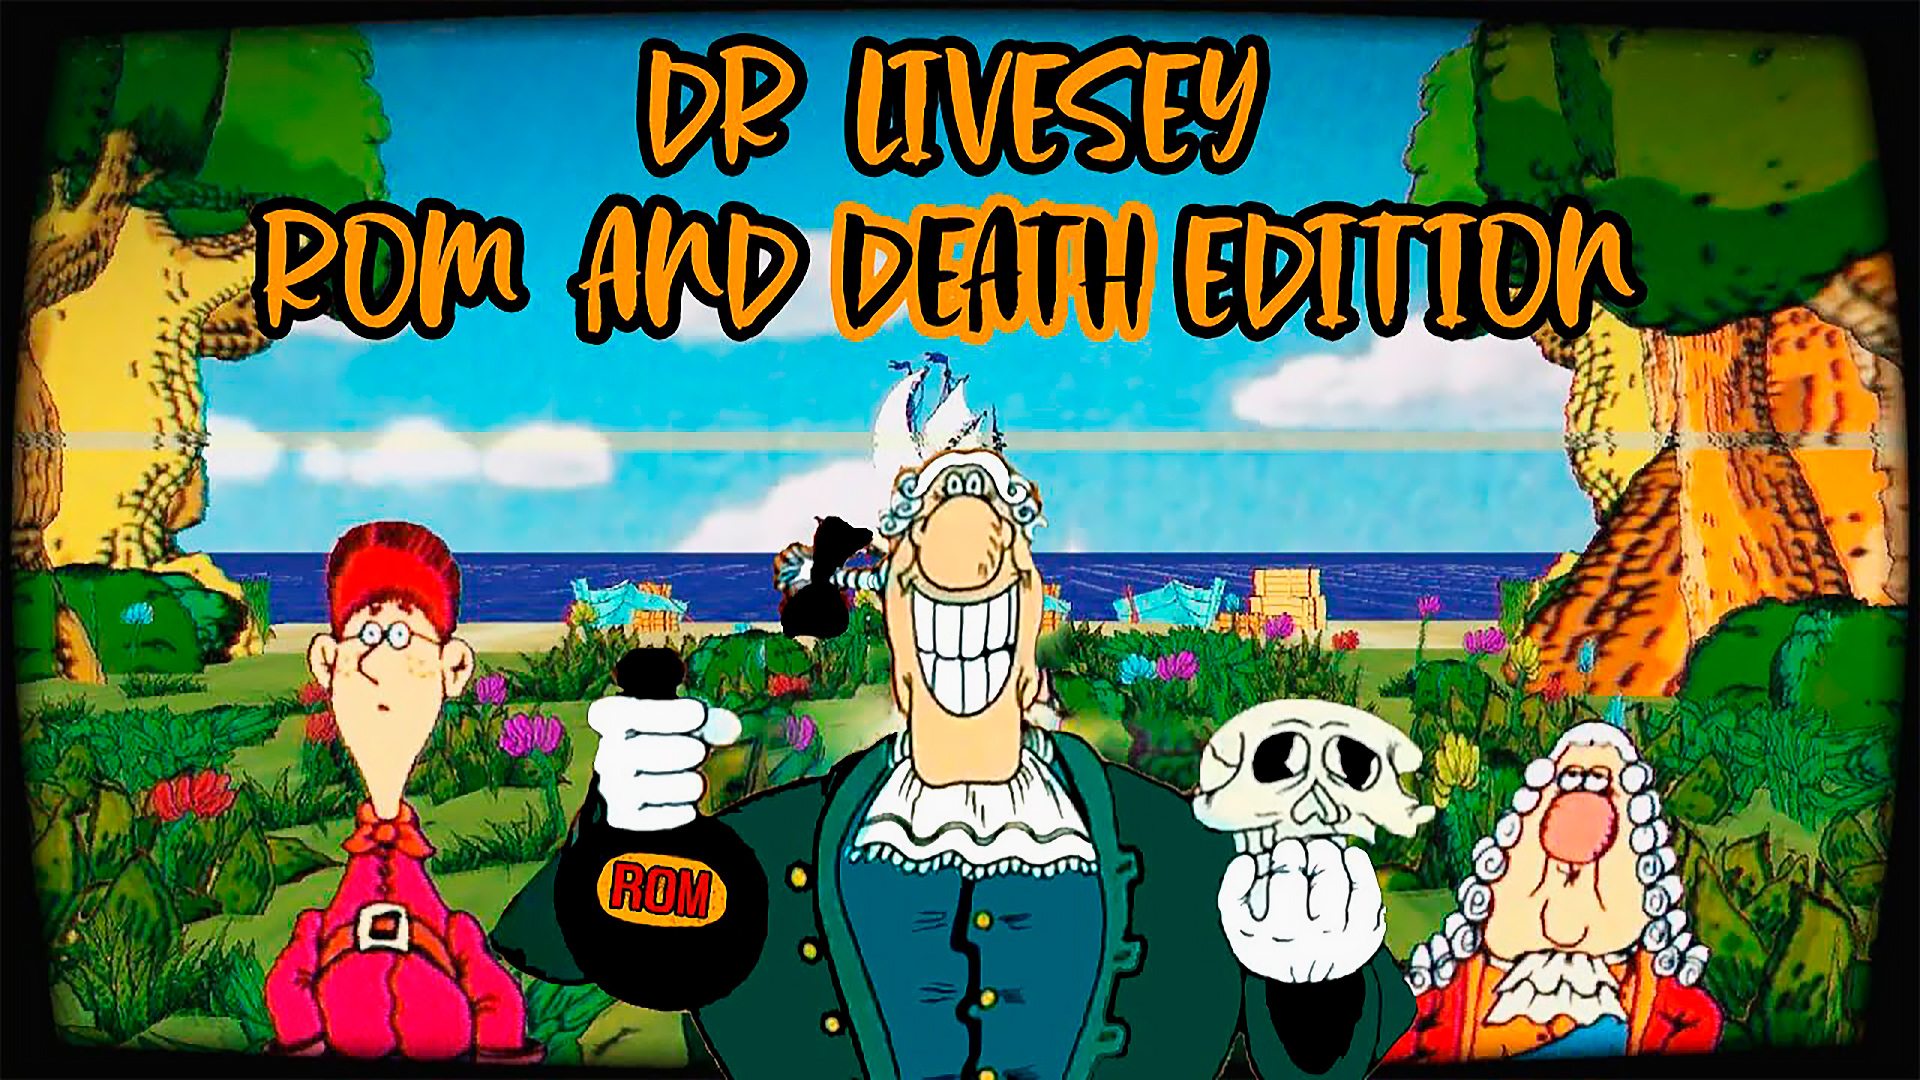 Доктор Ливси приветствует вас. DR LIVESEY ROM AND DEATH EDITION